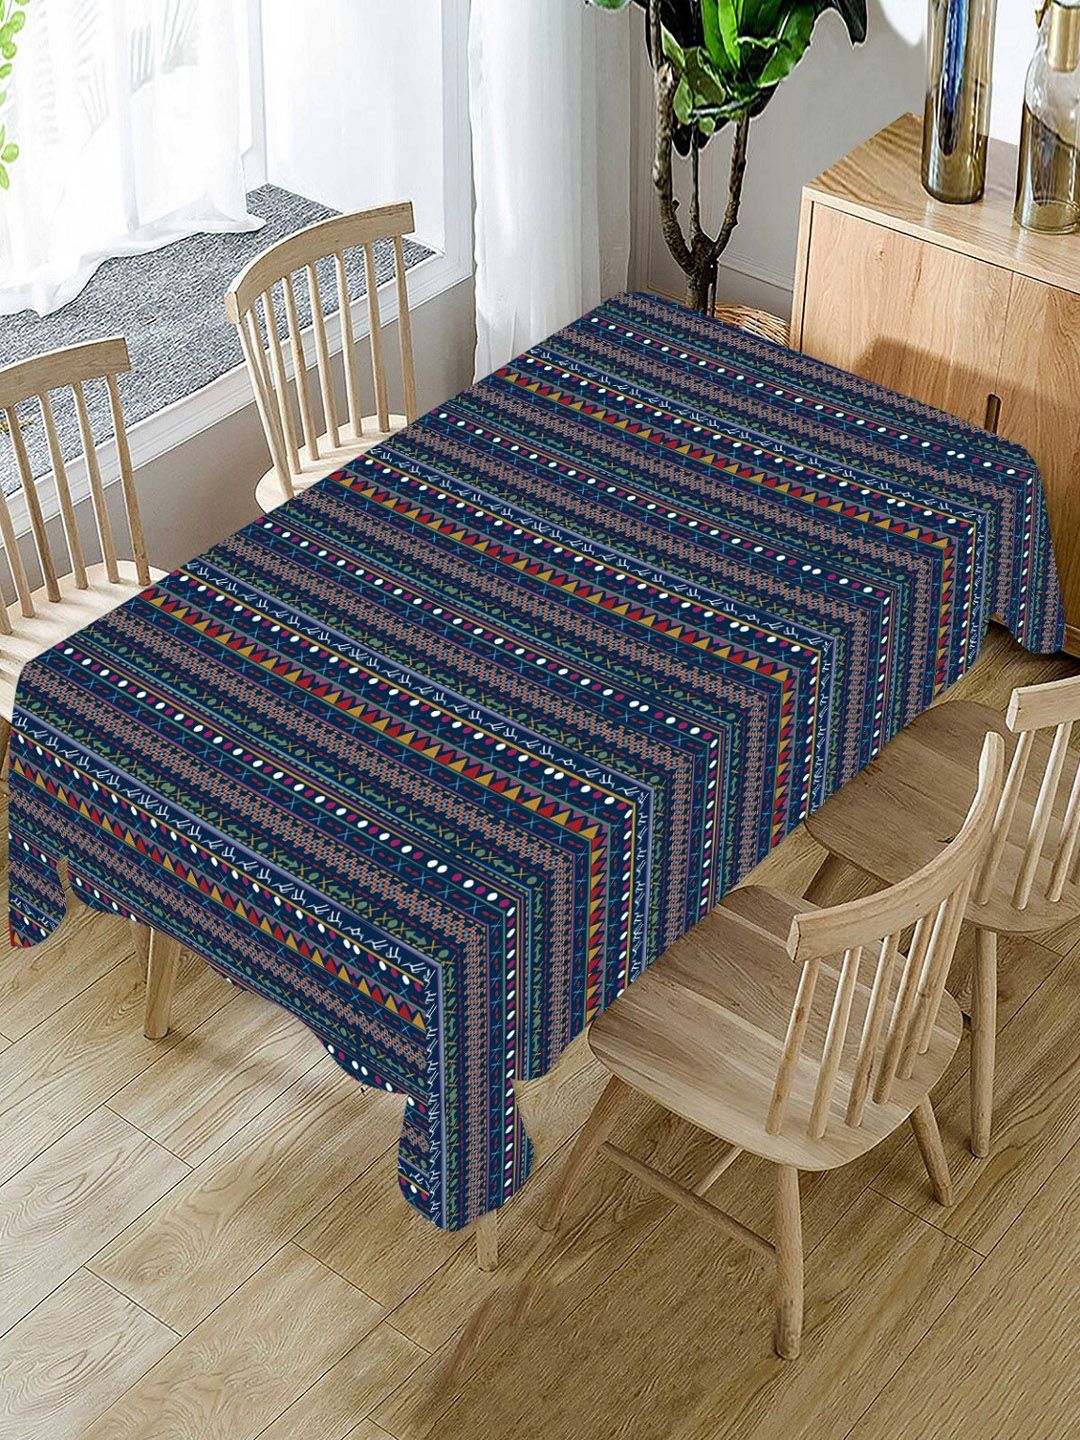 AEROHAVEN Multicoloured Geometric Printed Cotton 4-Seater Table Cover Price in India